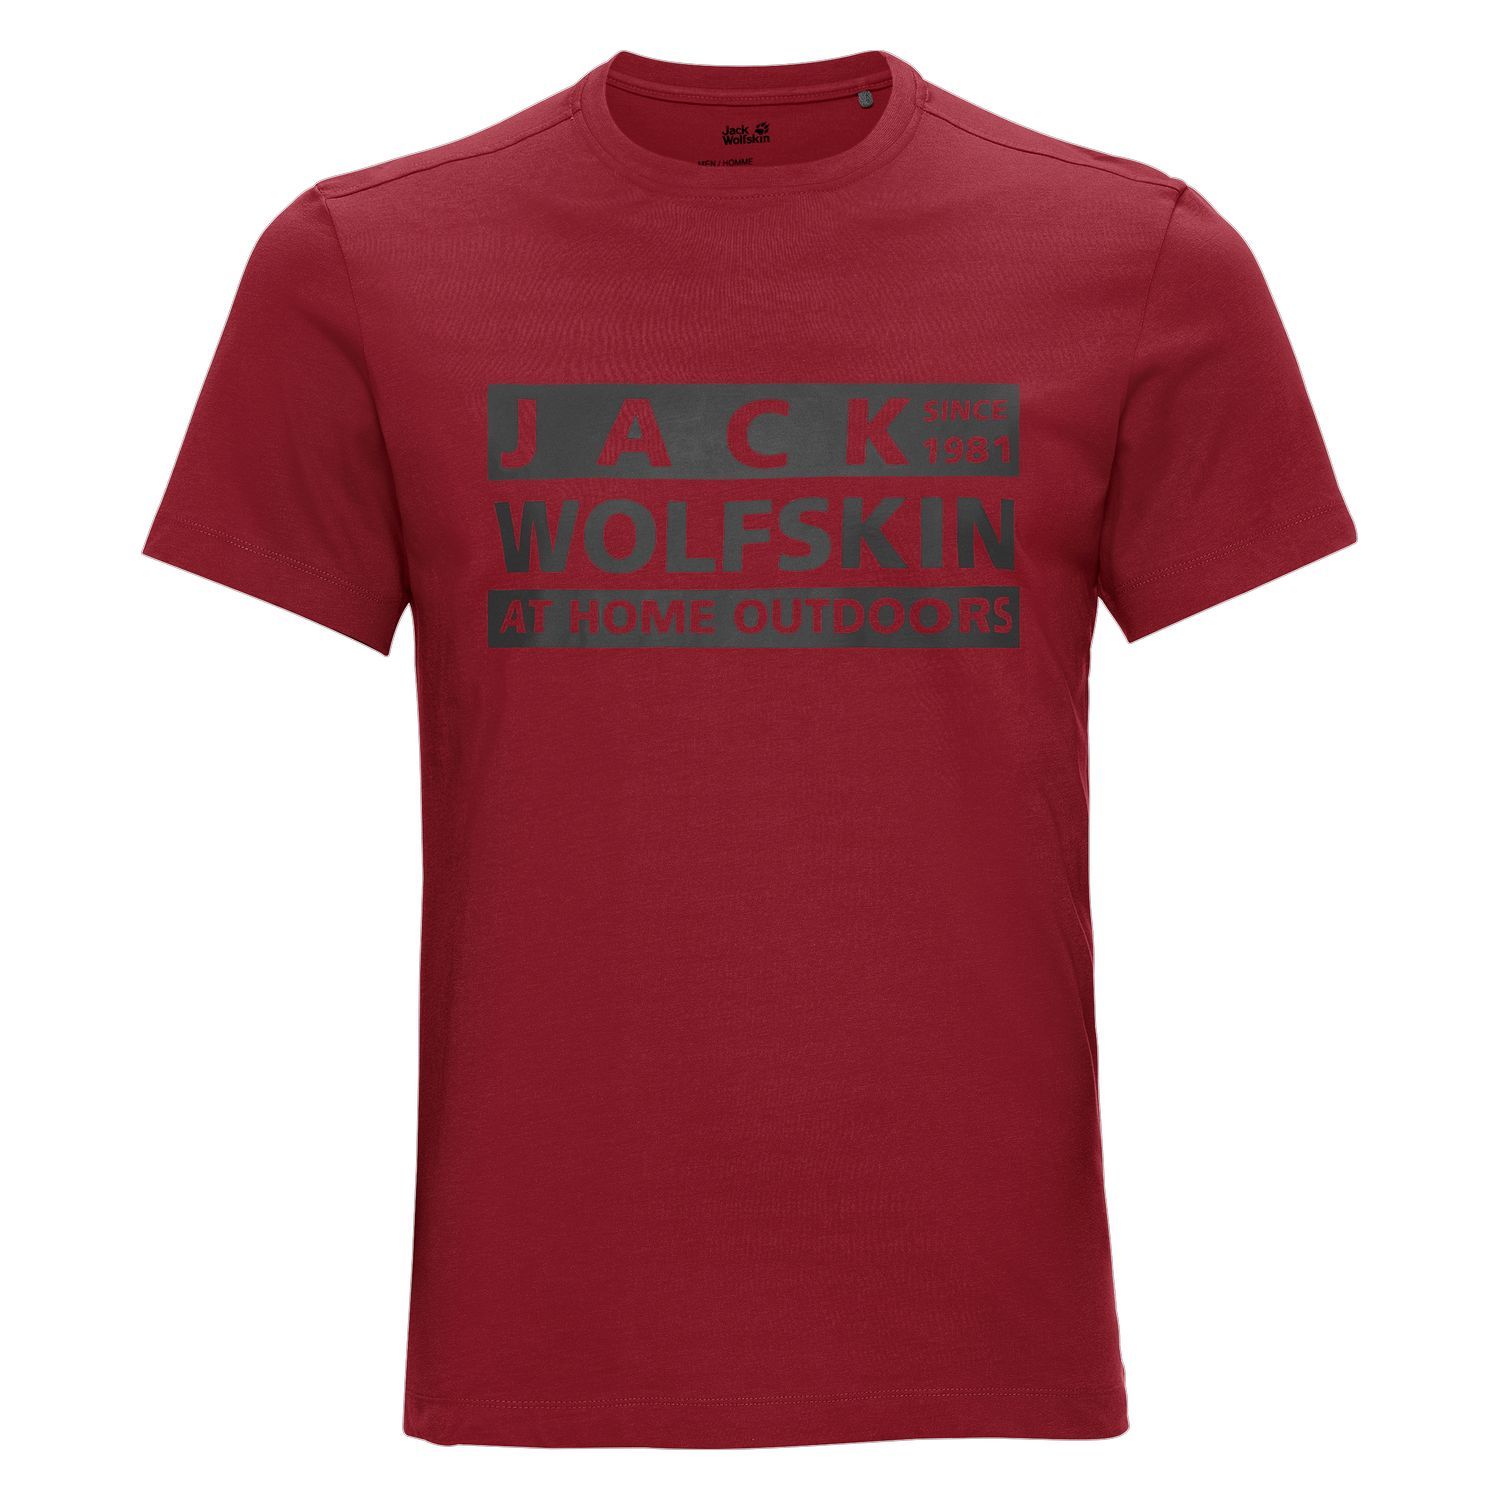 Jack Wolfskin Brand T-Shirt - Mens (Dark Lacquer Red)